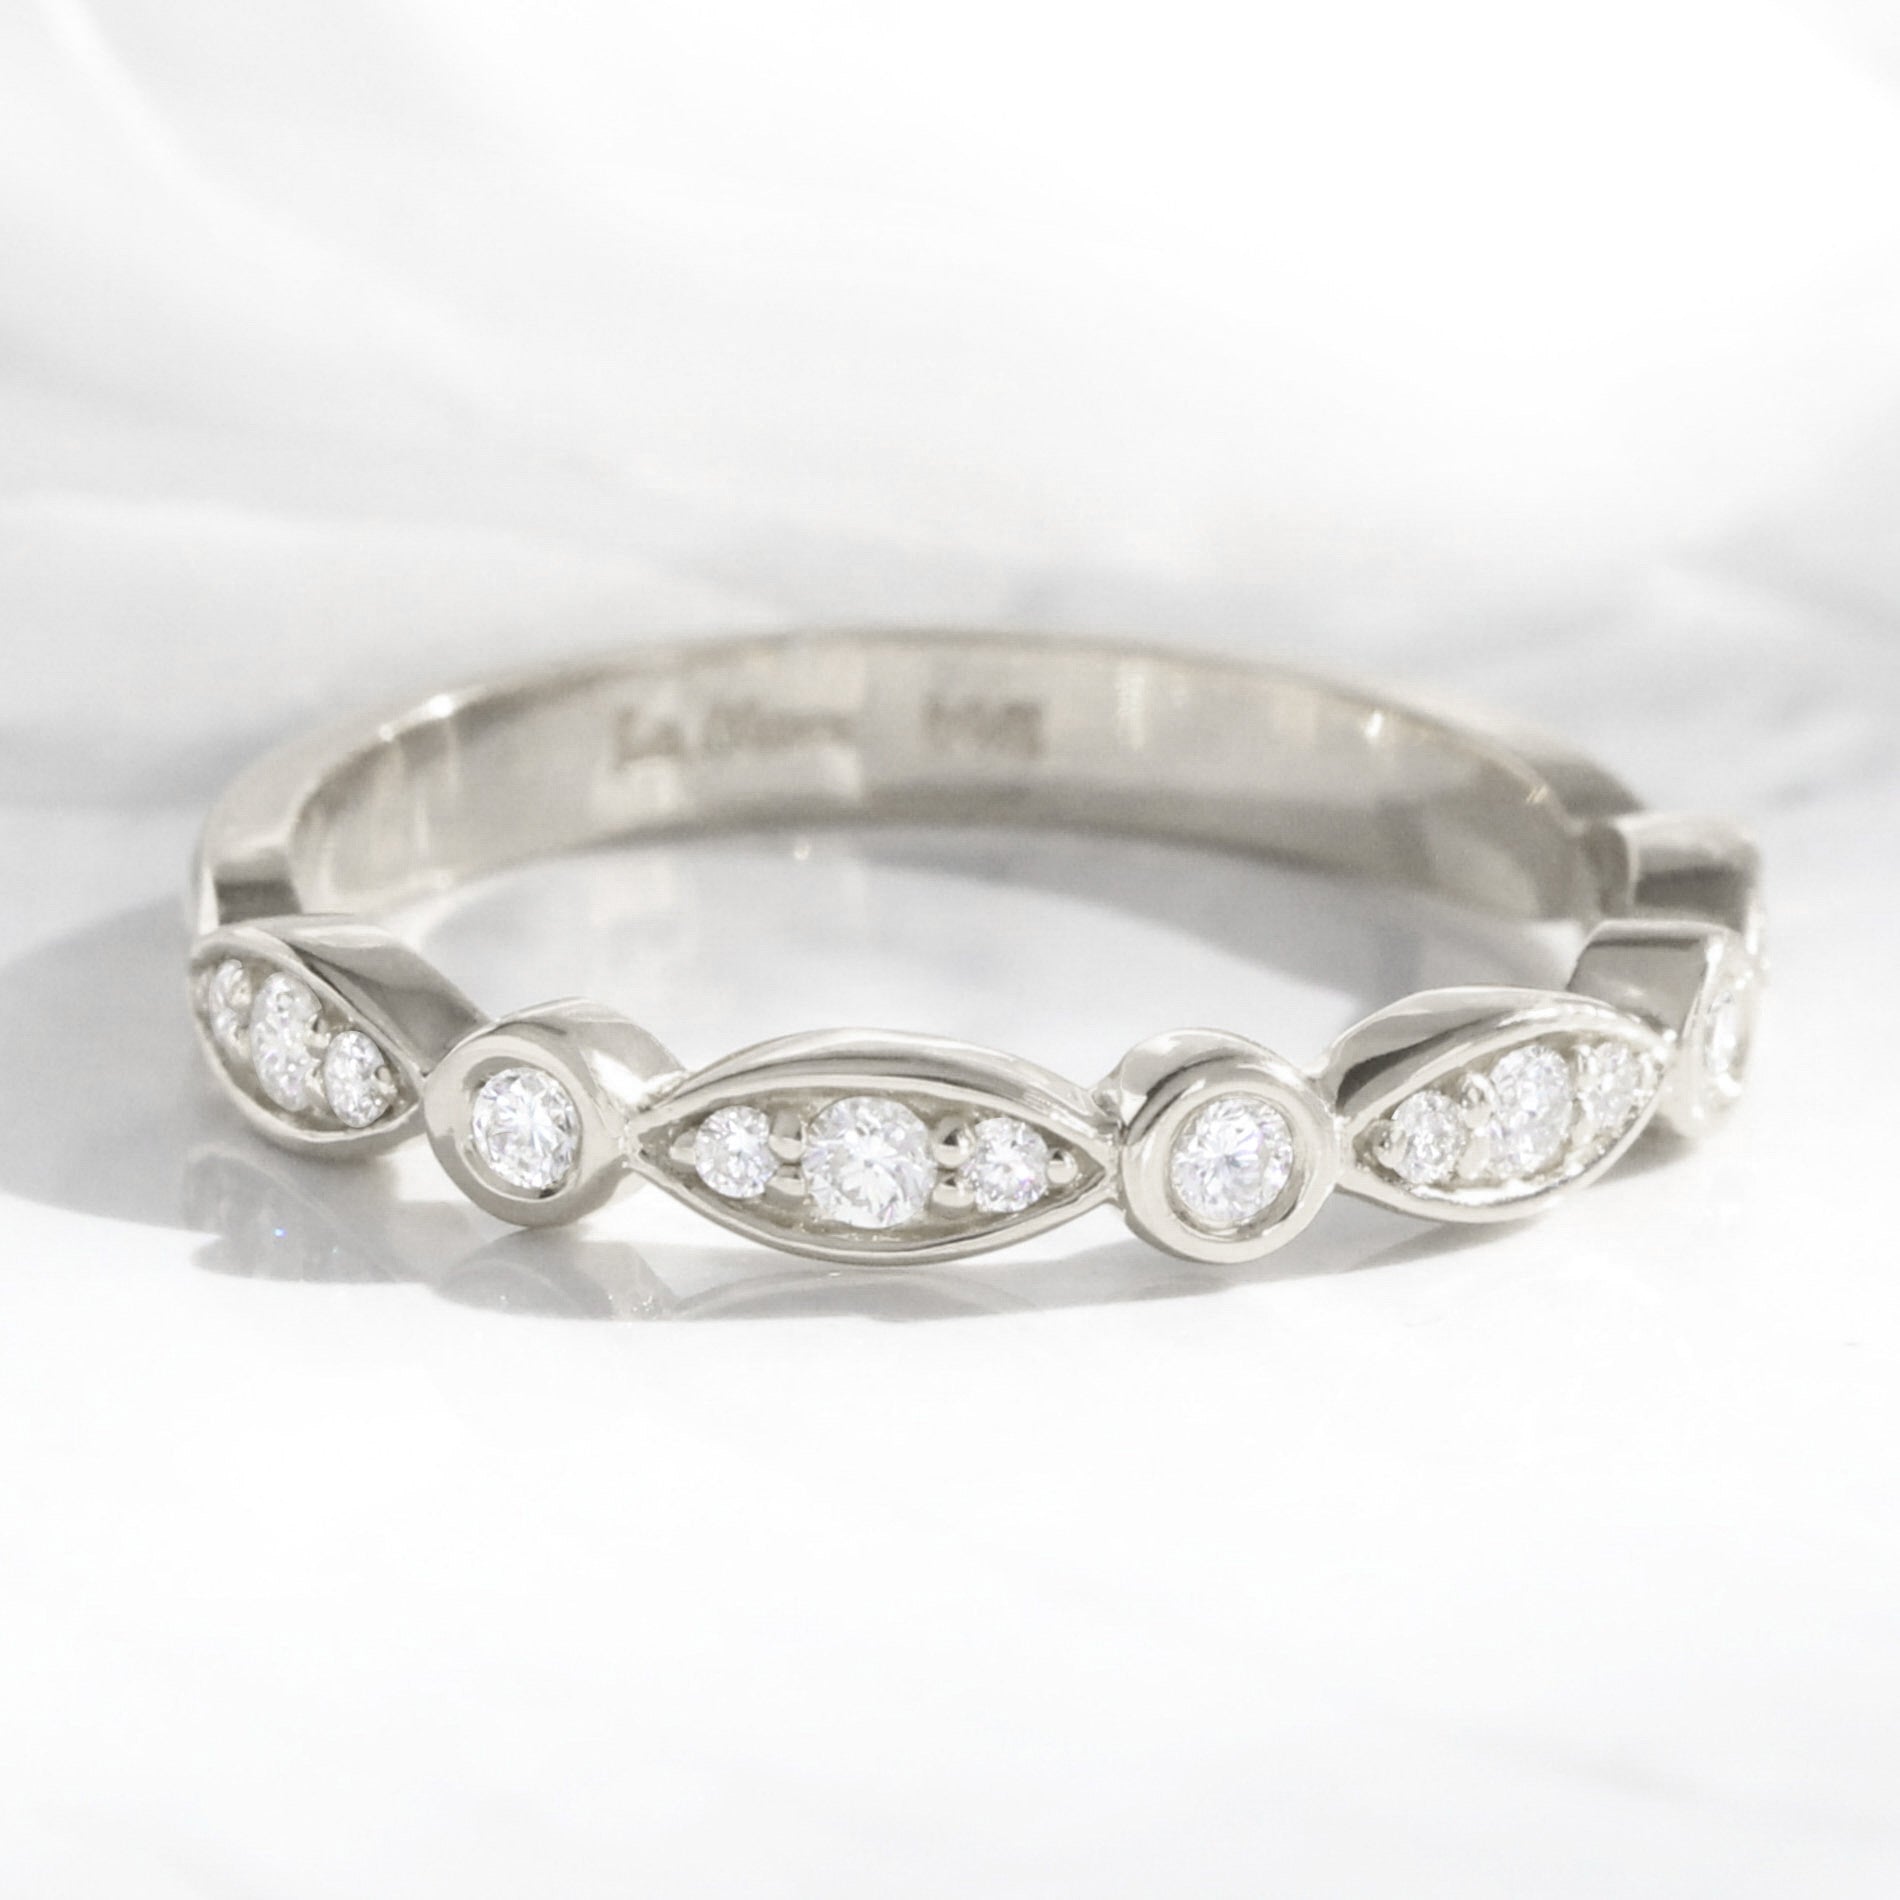 Bezel diamond wedding ring white gold scalloped half eternity band la more design jewelry